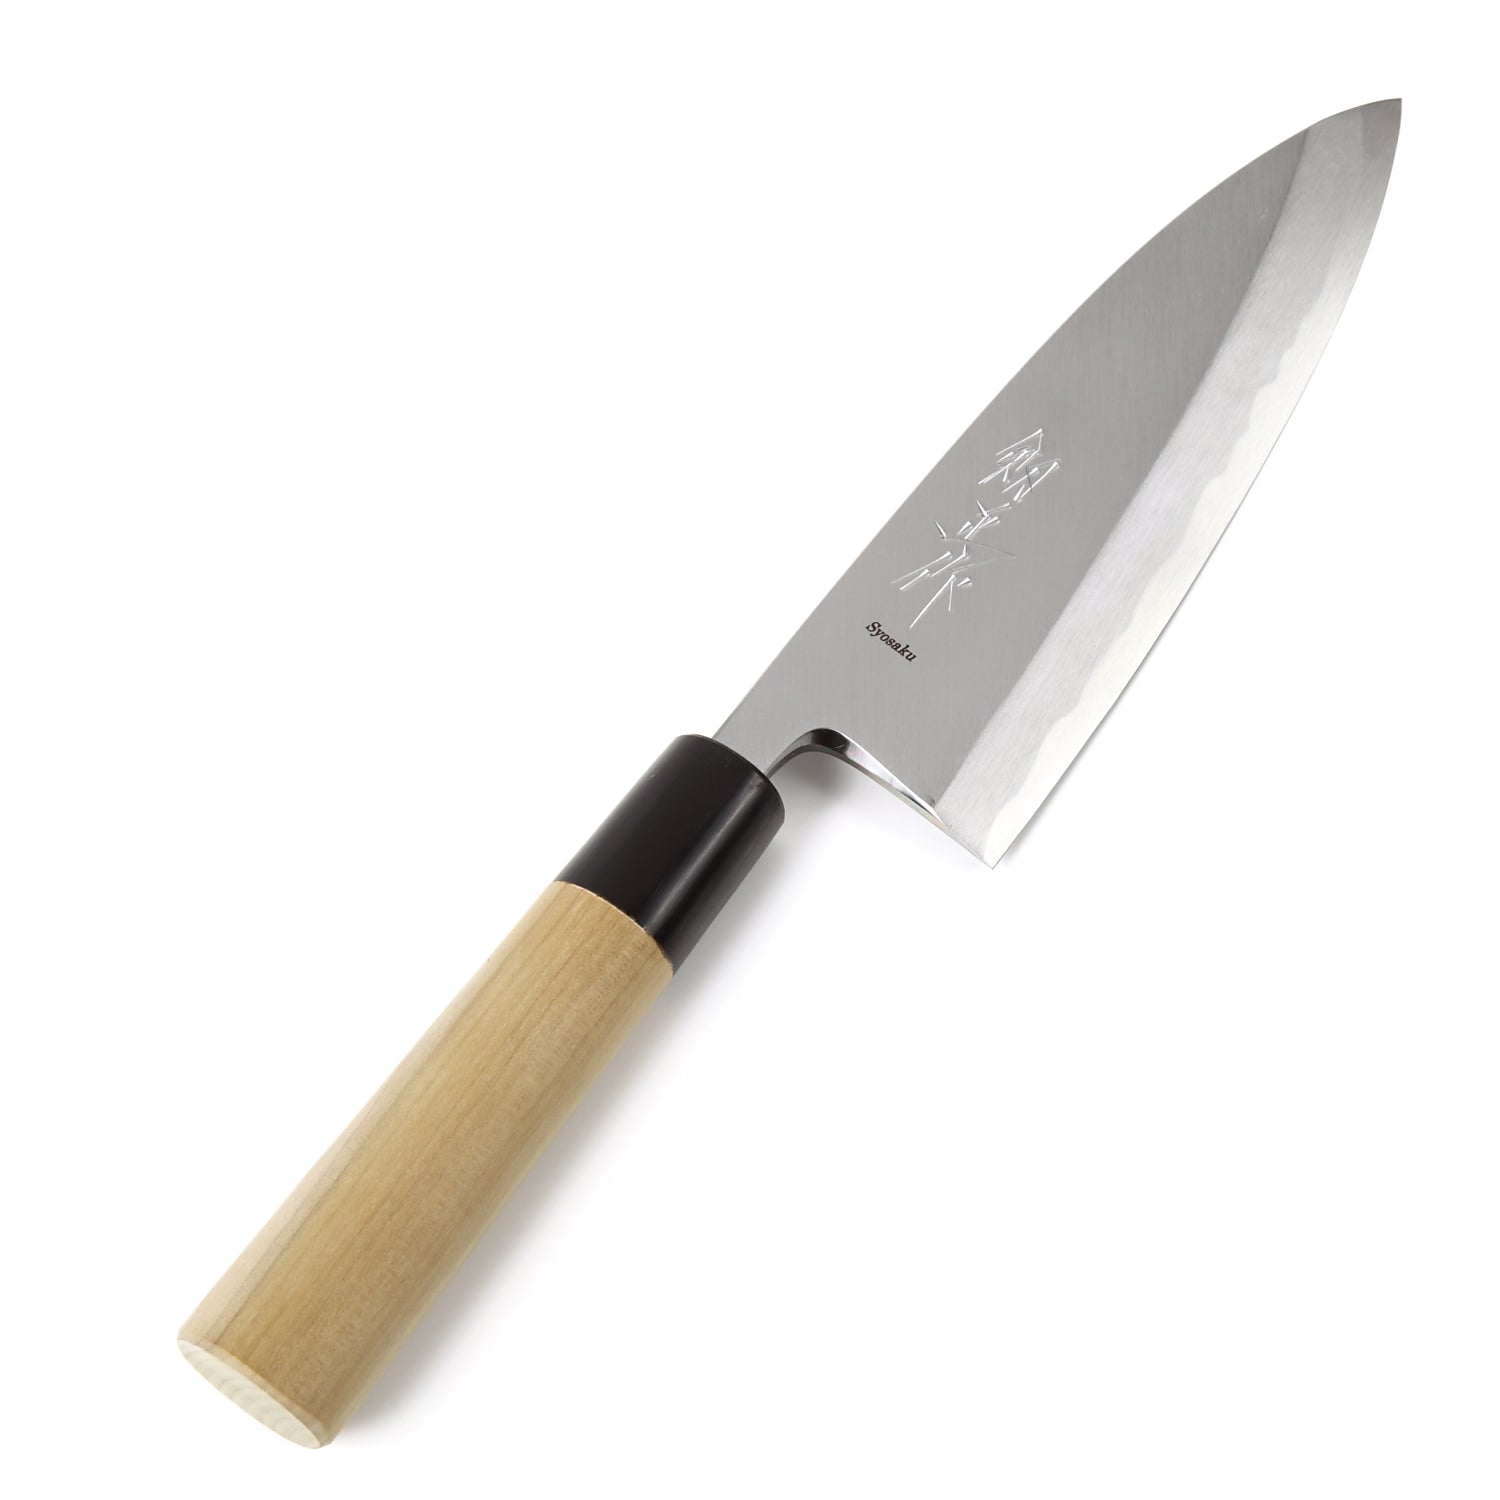 Premium Forged Bone Chopping Knife - Durable & Razor-sharp For